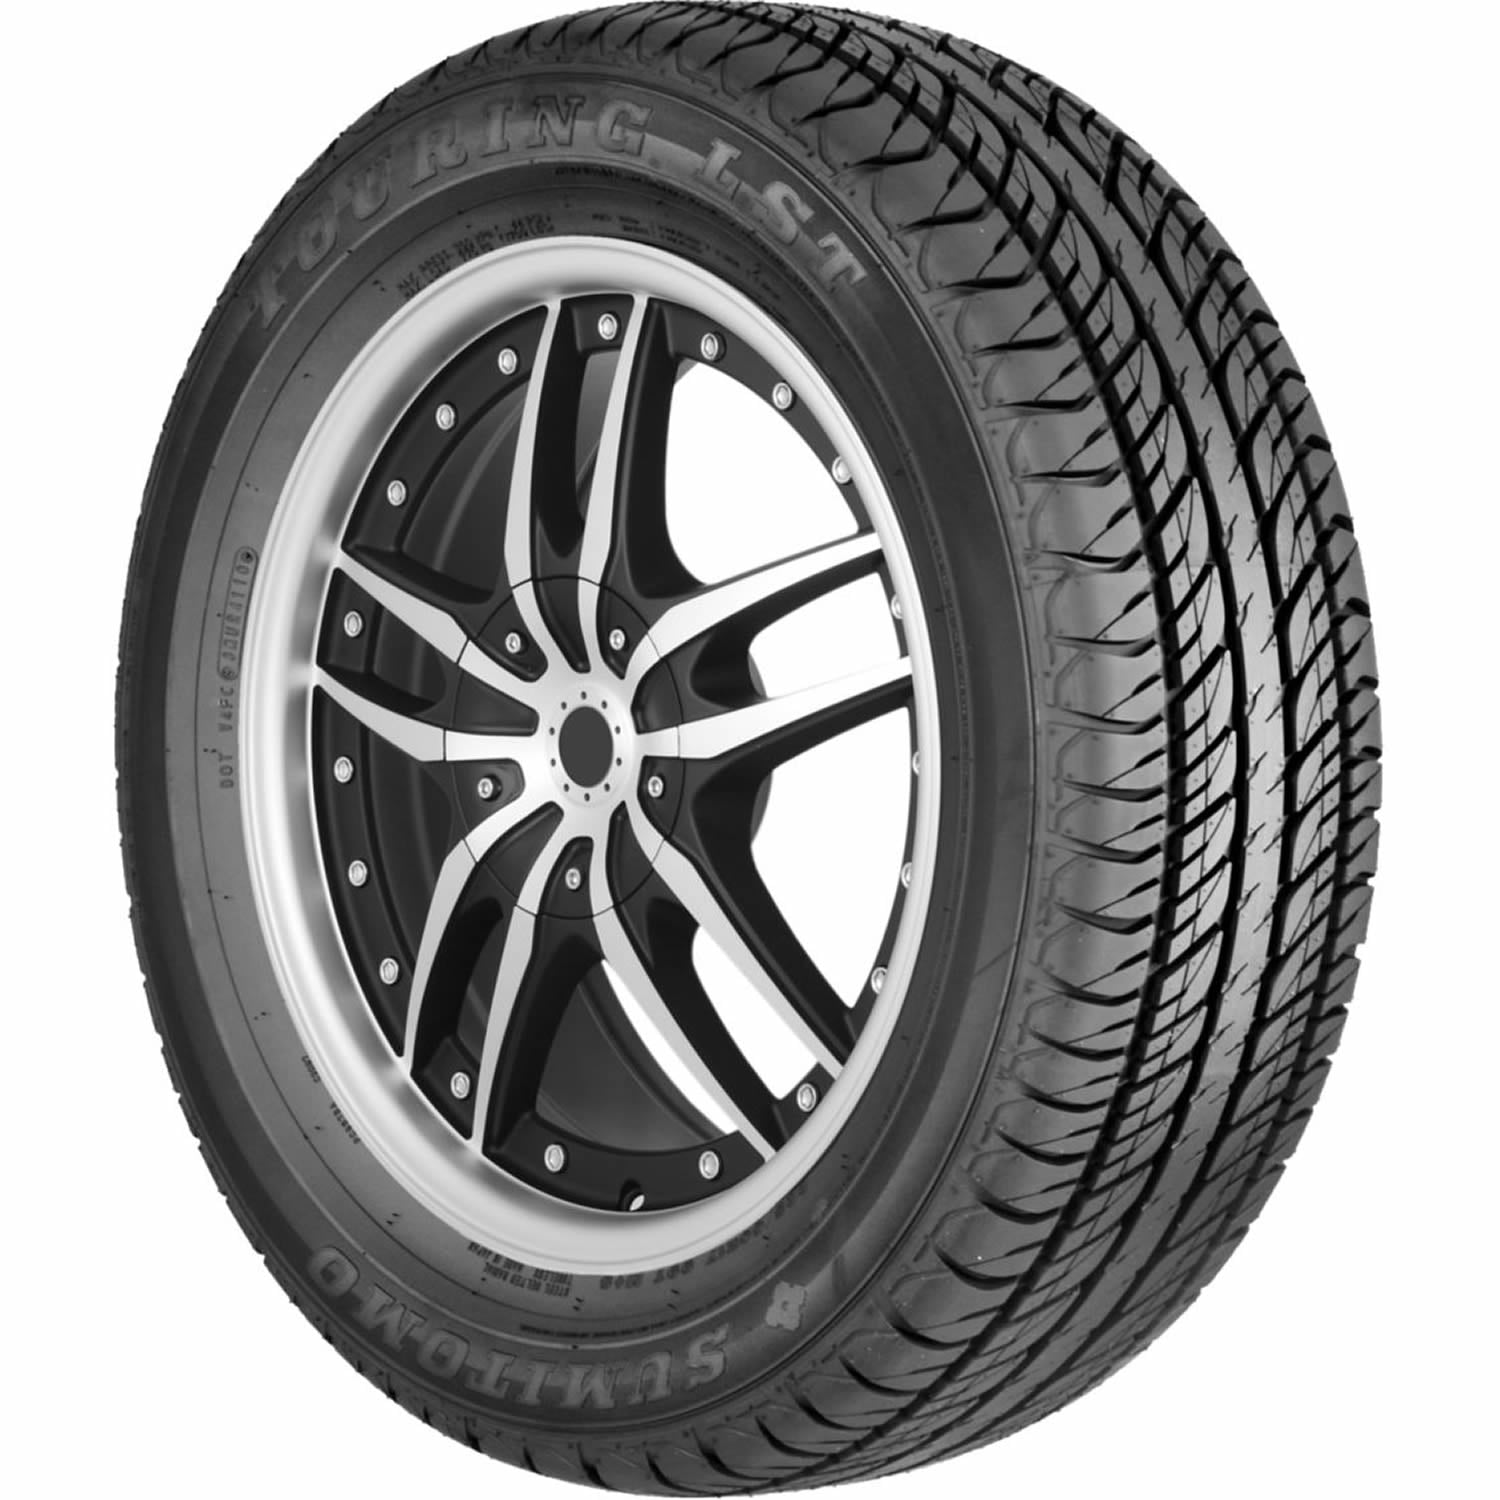 SUMITOMO TOURING LS 185/65R15 (24.7X7.3R 15) Tires